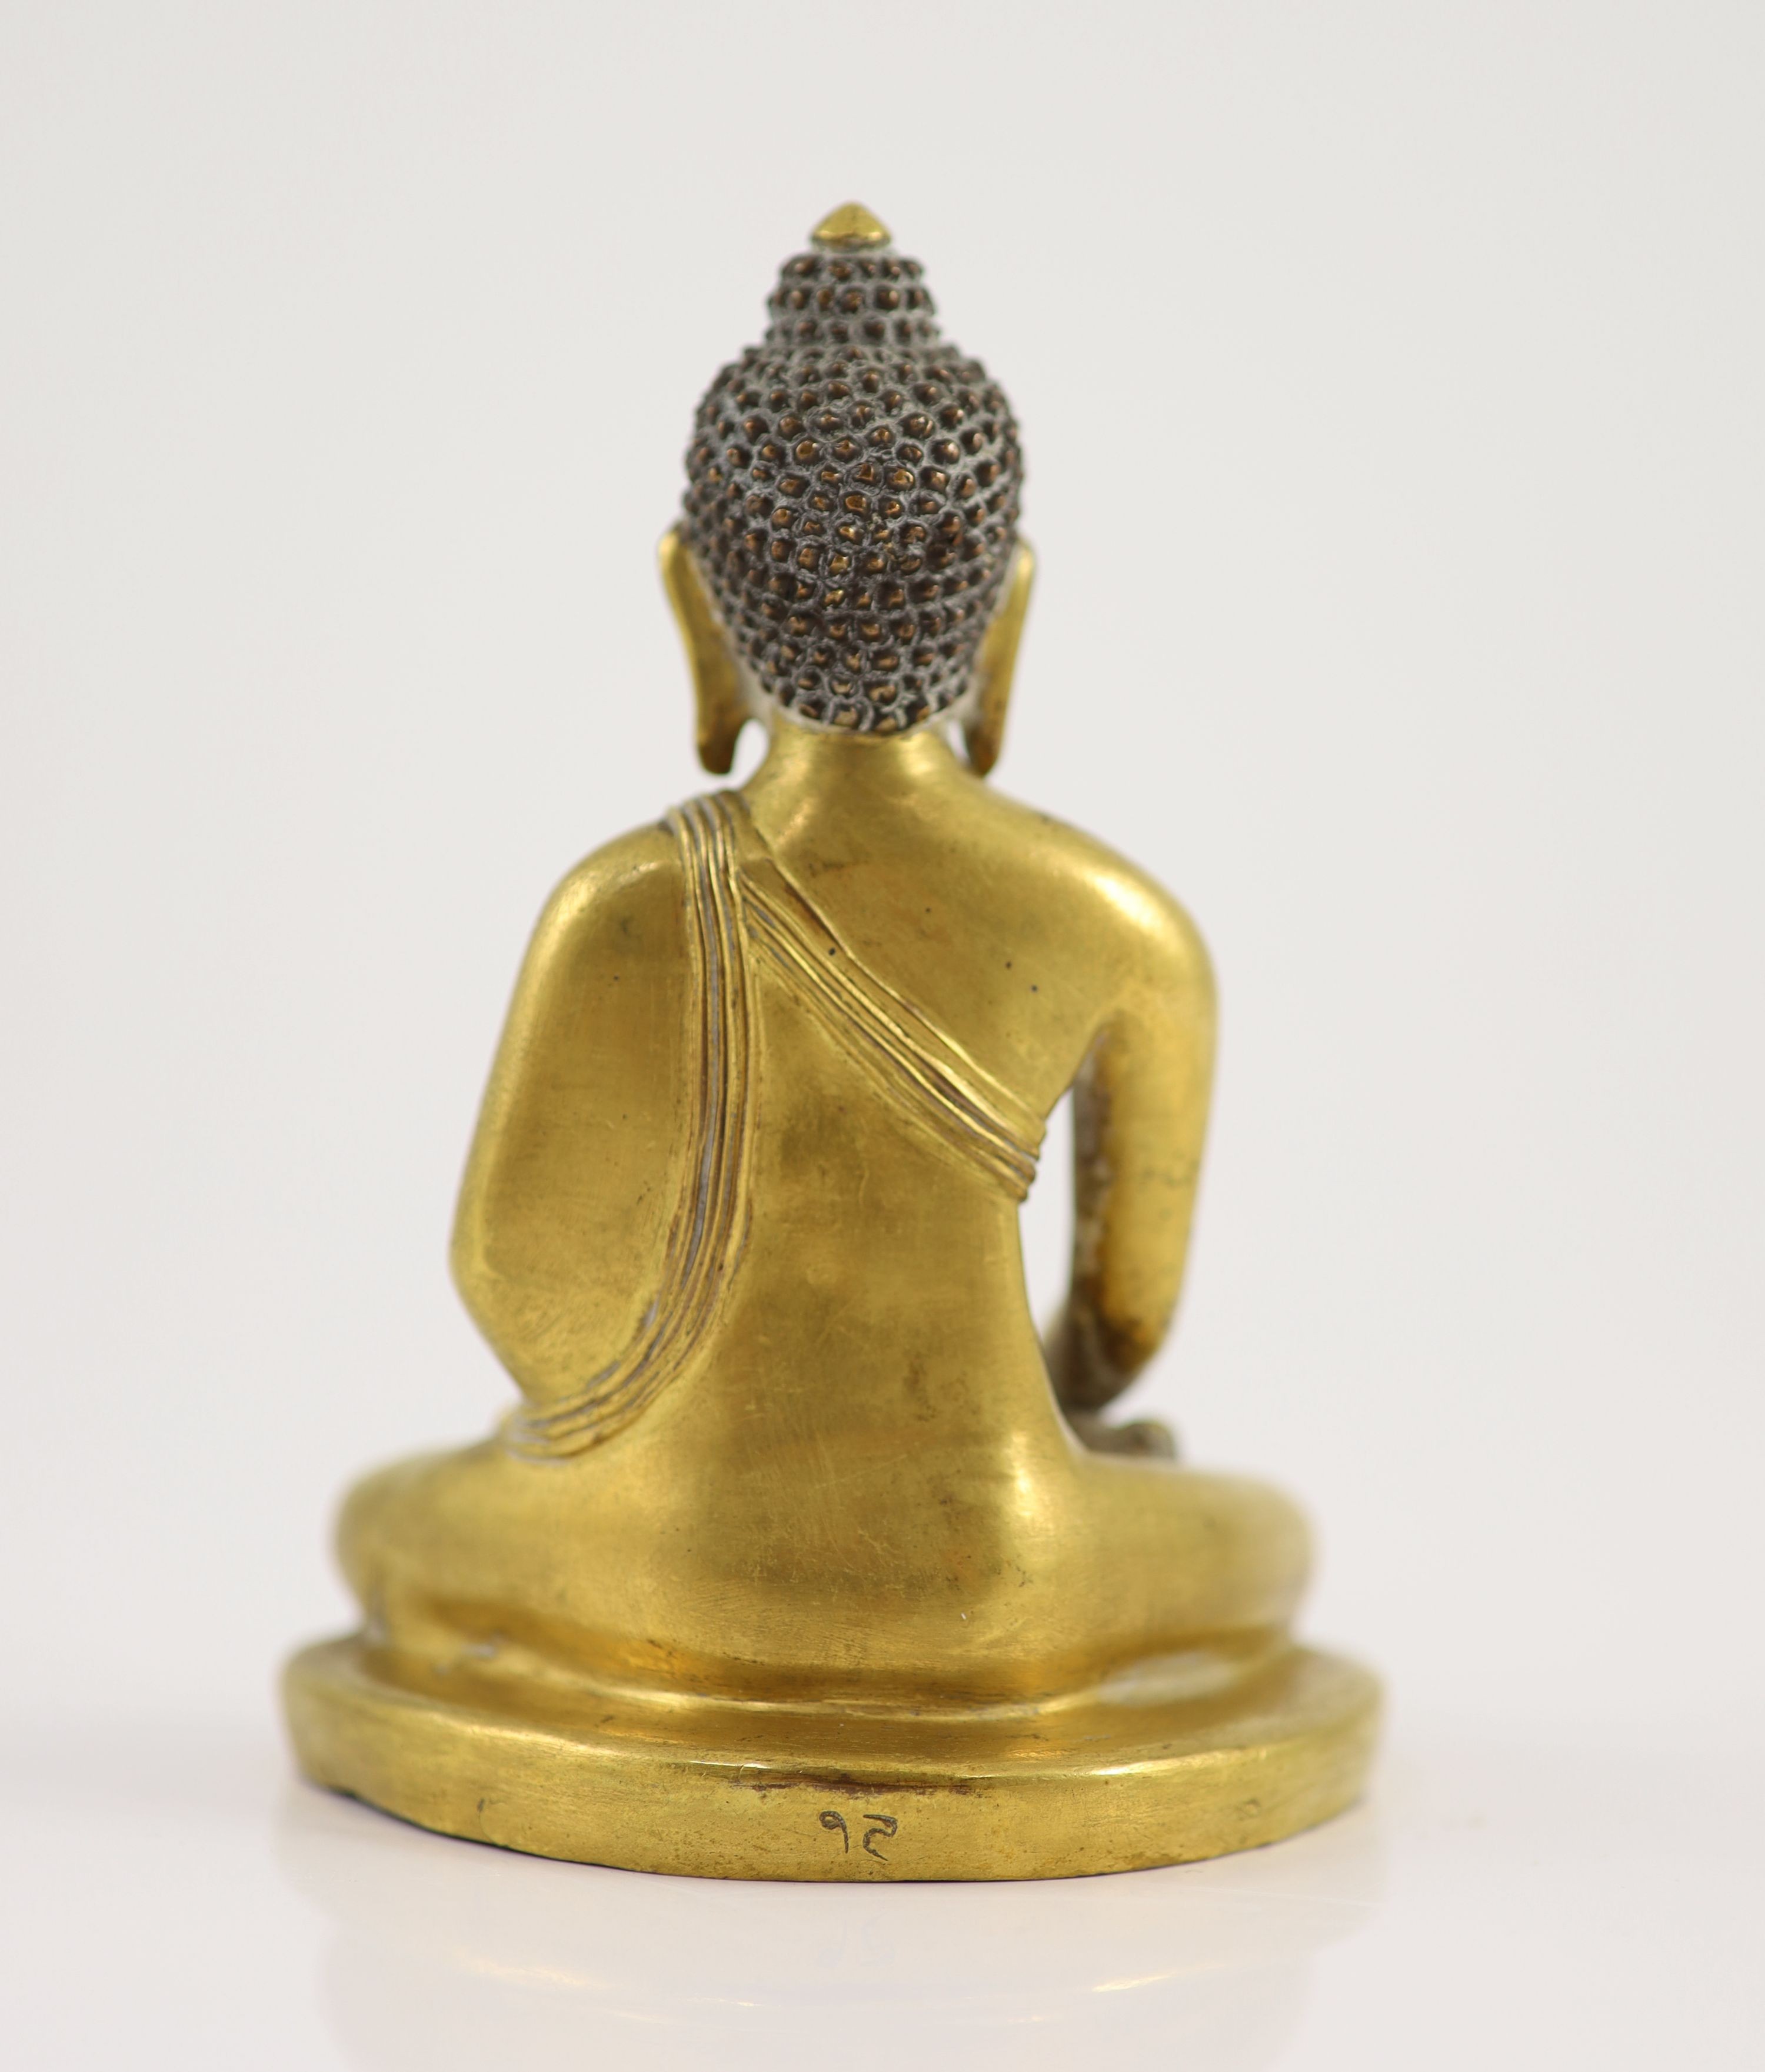 A Tibetan gilt copper alloy seated figure of Buddha Shakyamuni, 18th century, 13cm high